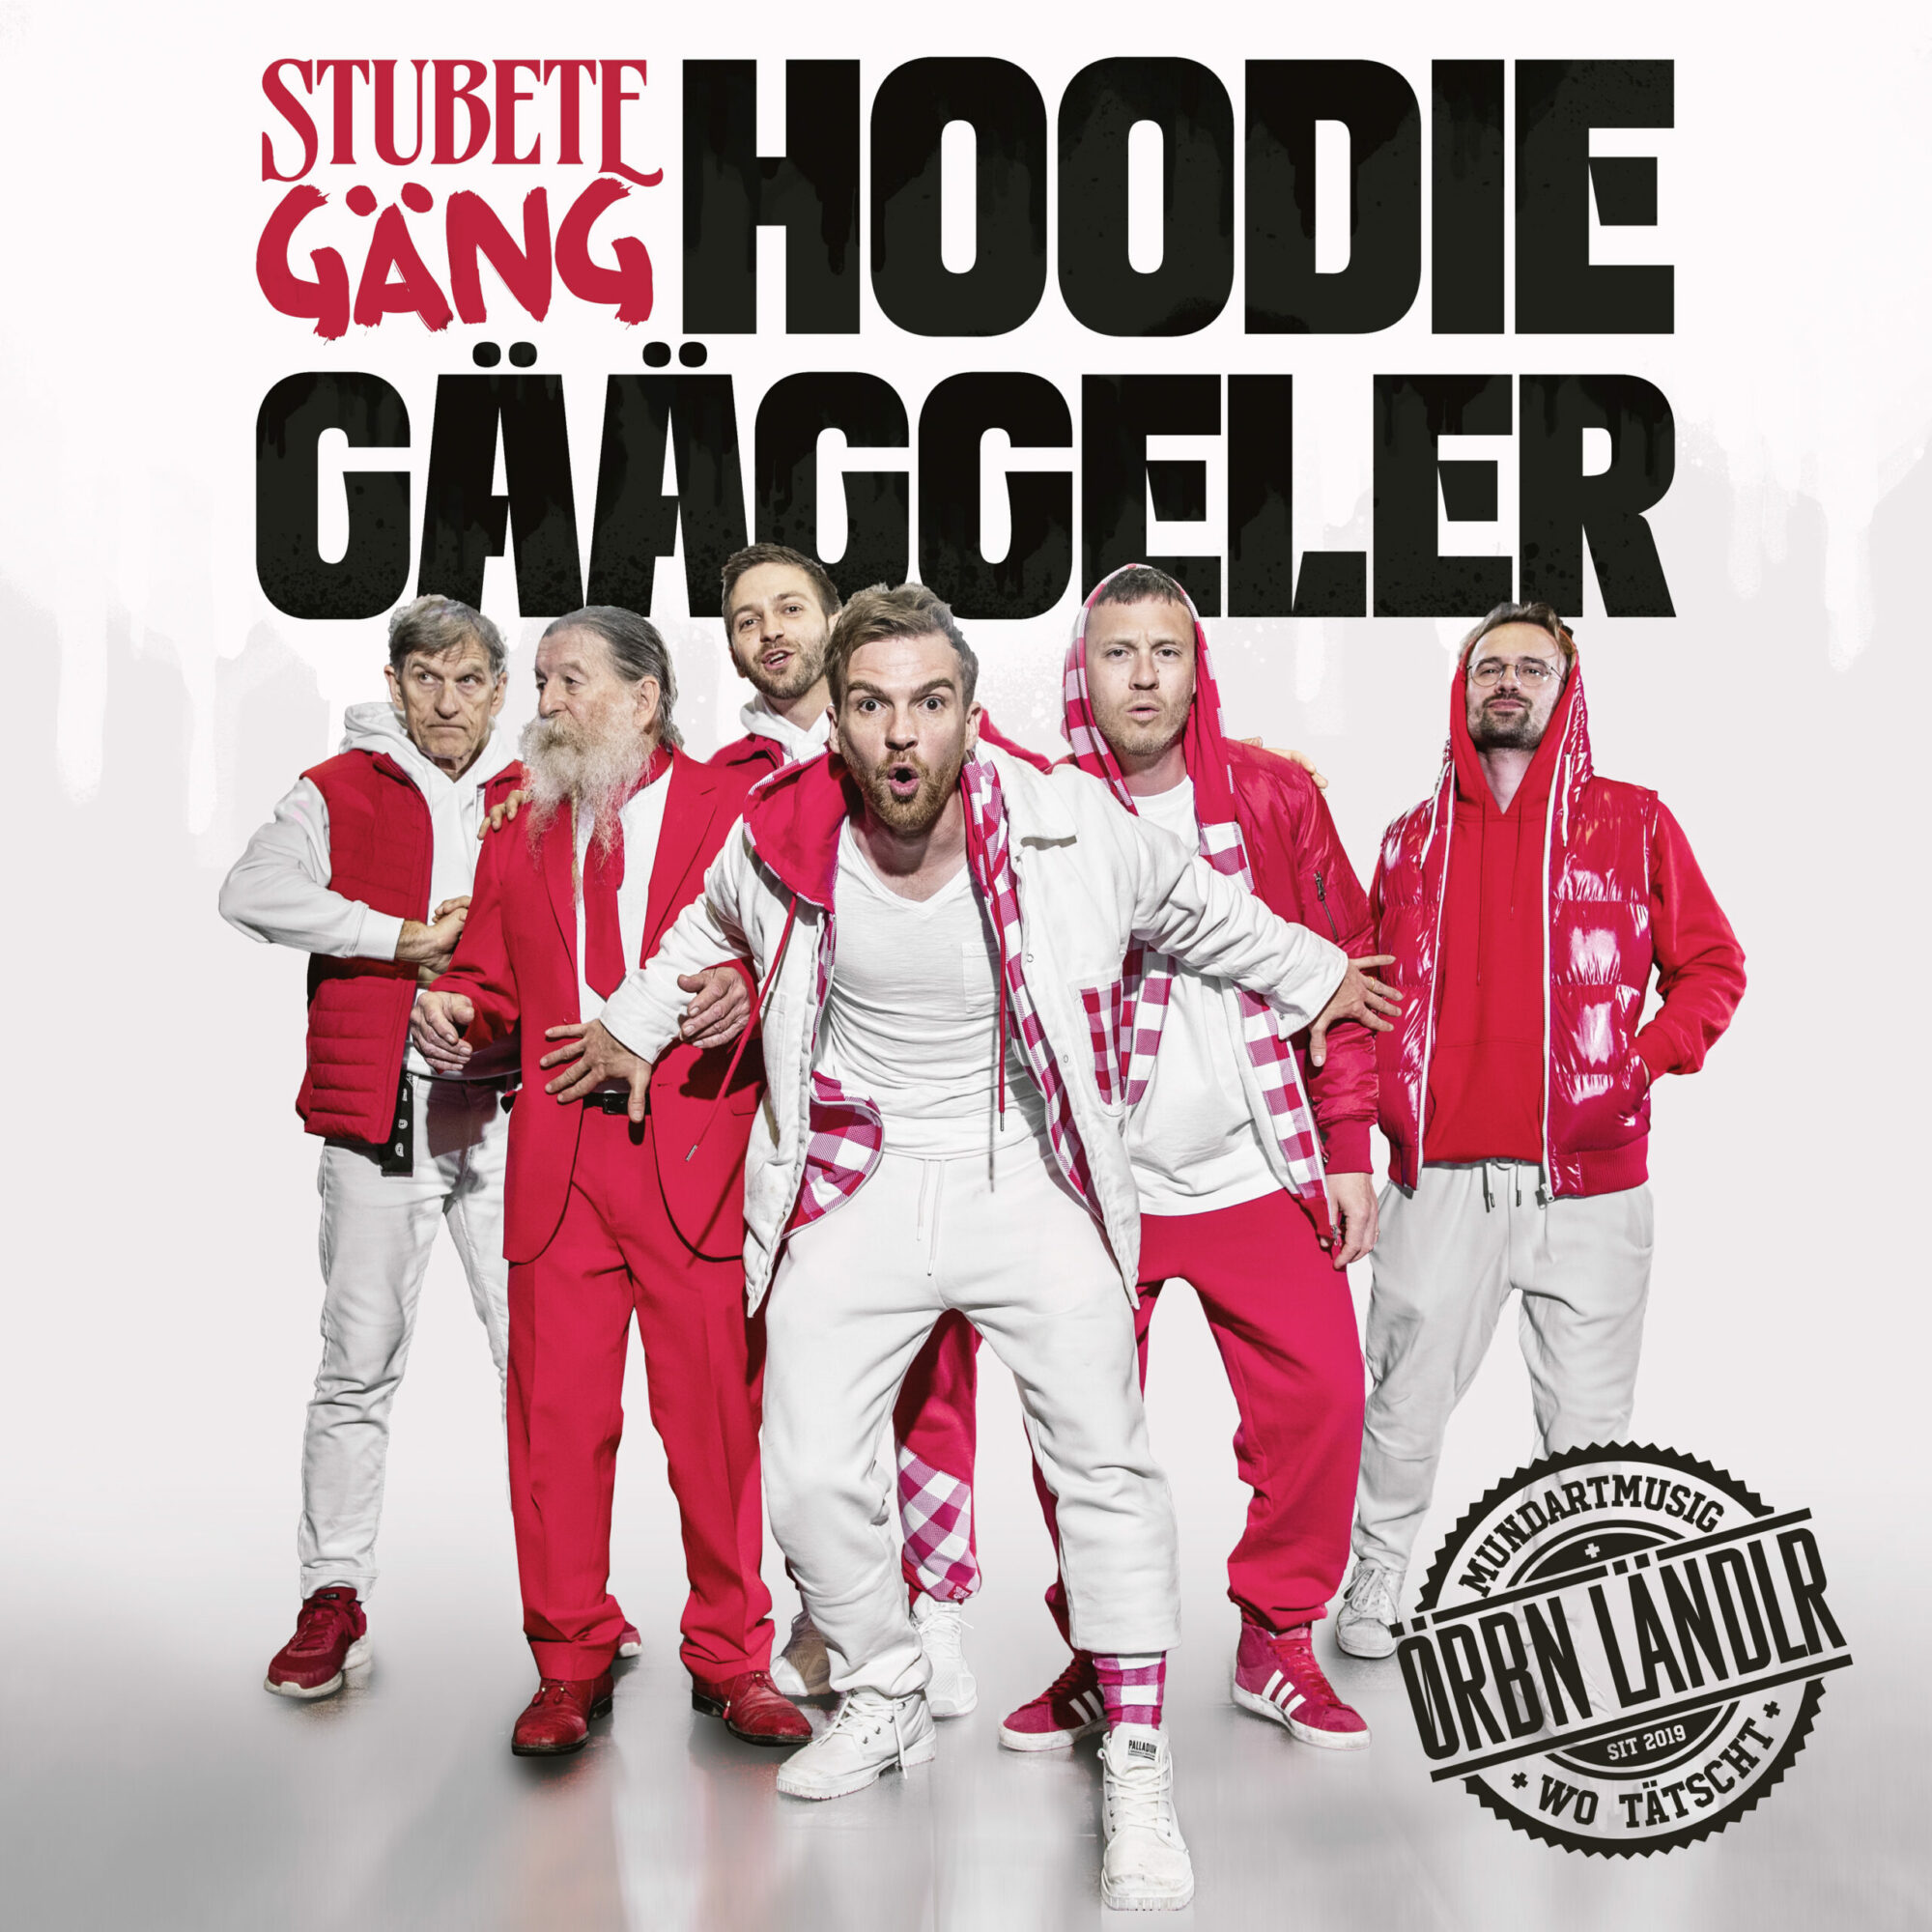 Stubete Gäng_Hoodie Gääggeler_Cover